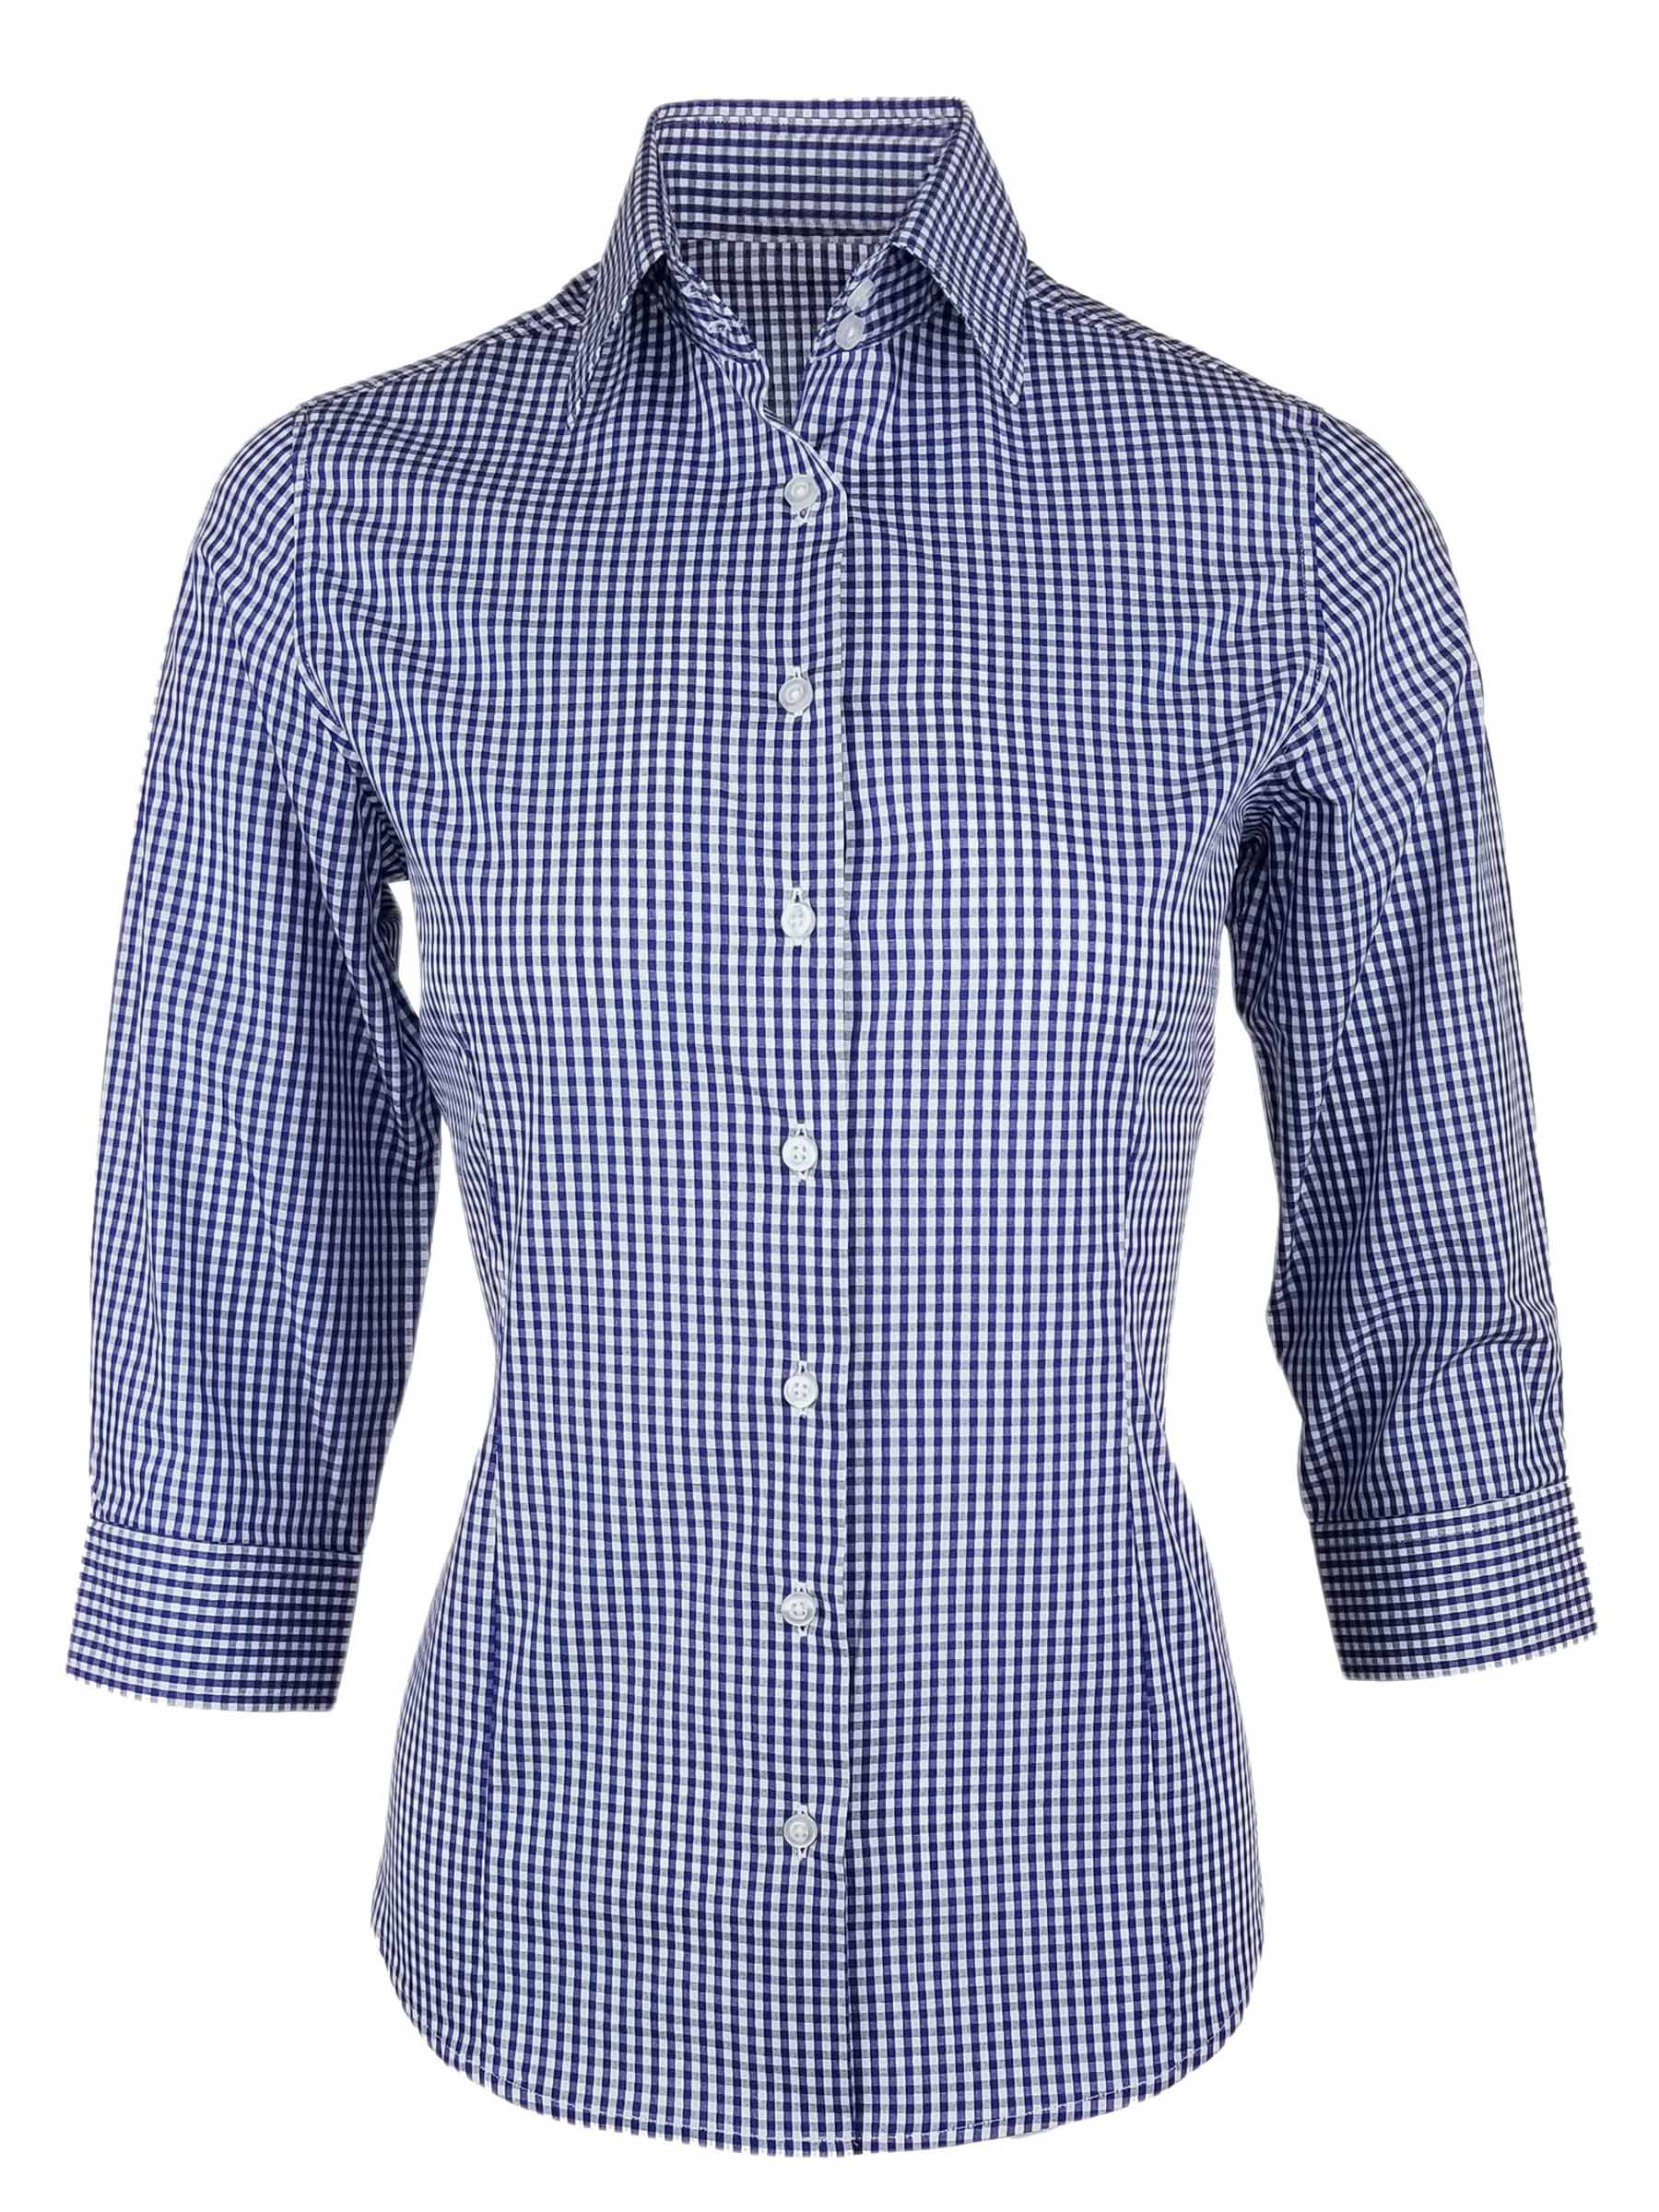 Women's Cotton Gingham Shirt - Cobalt Blue Check Three Quarter Sleeve ...